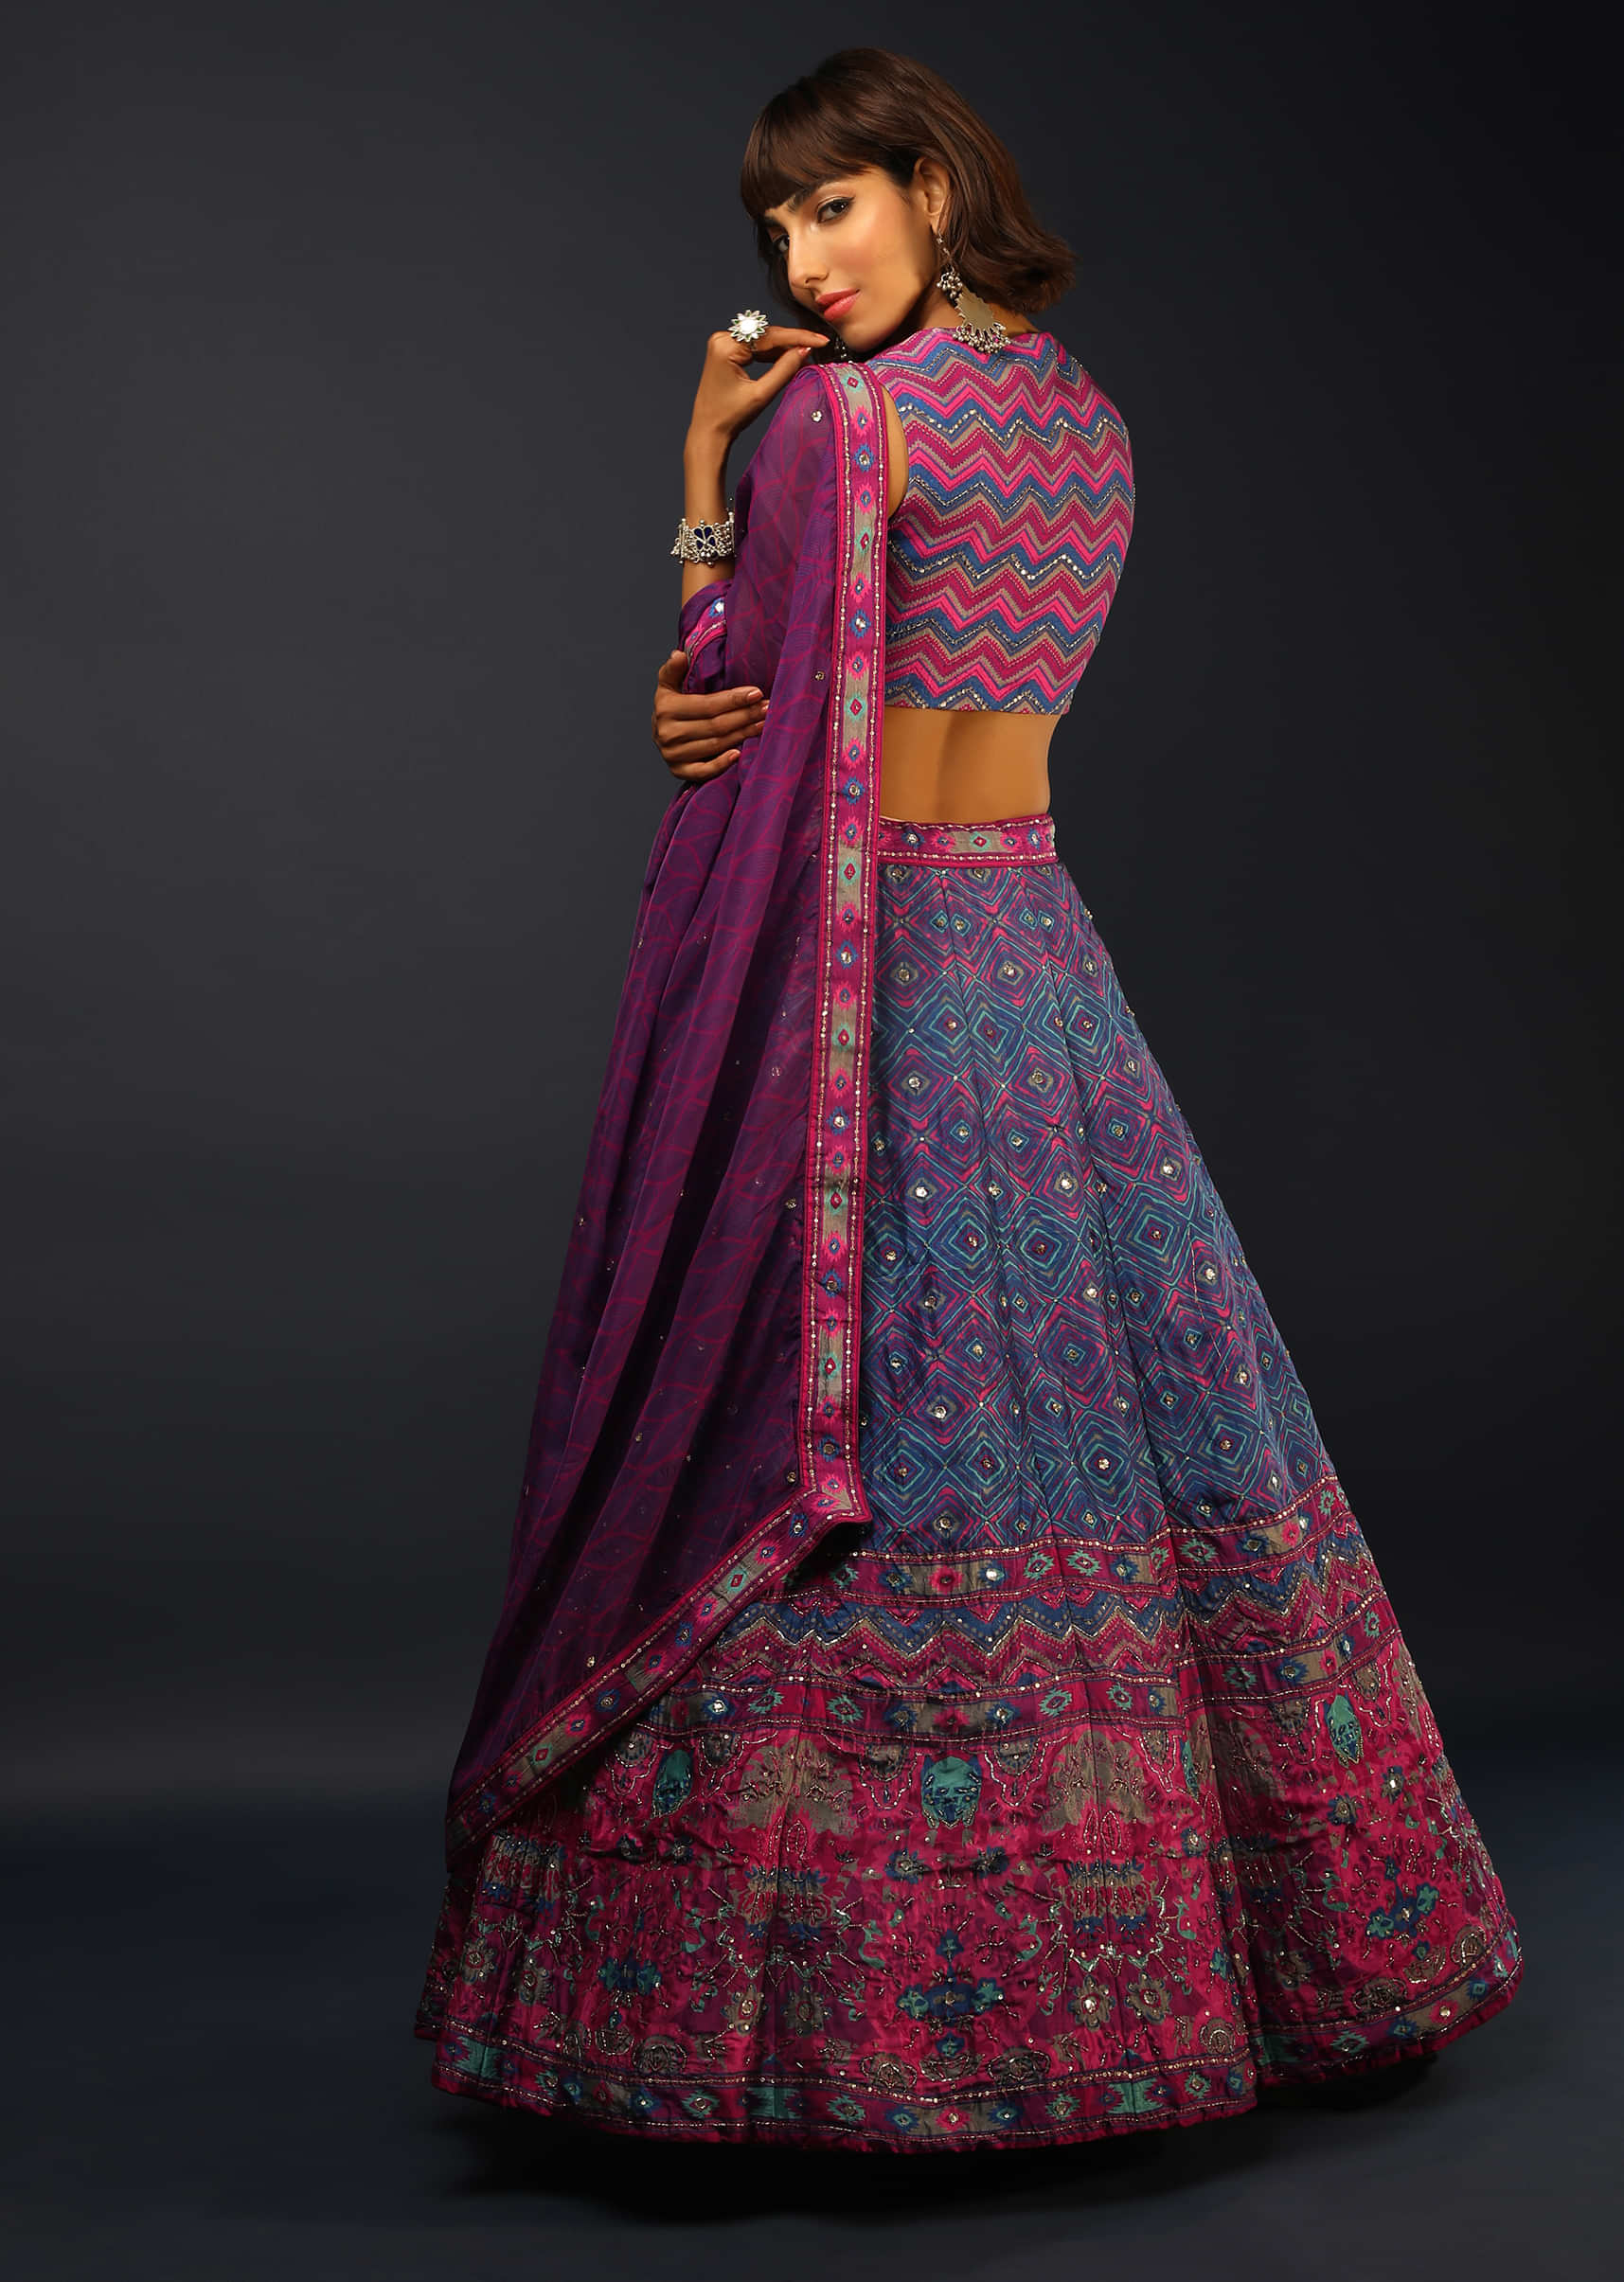 Victoria Blue Lehenga Choli In Silk With Tie Dye Print And Pink Patola Border 